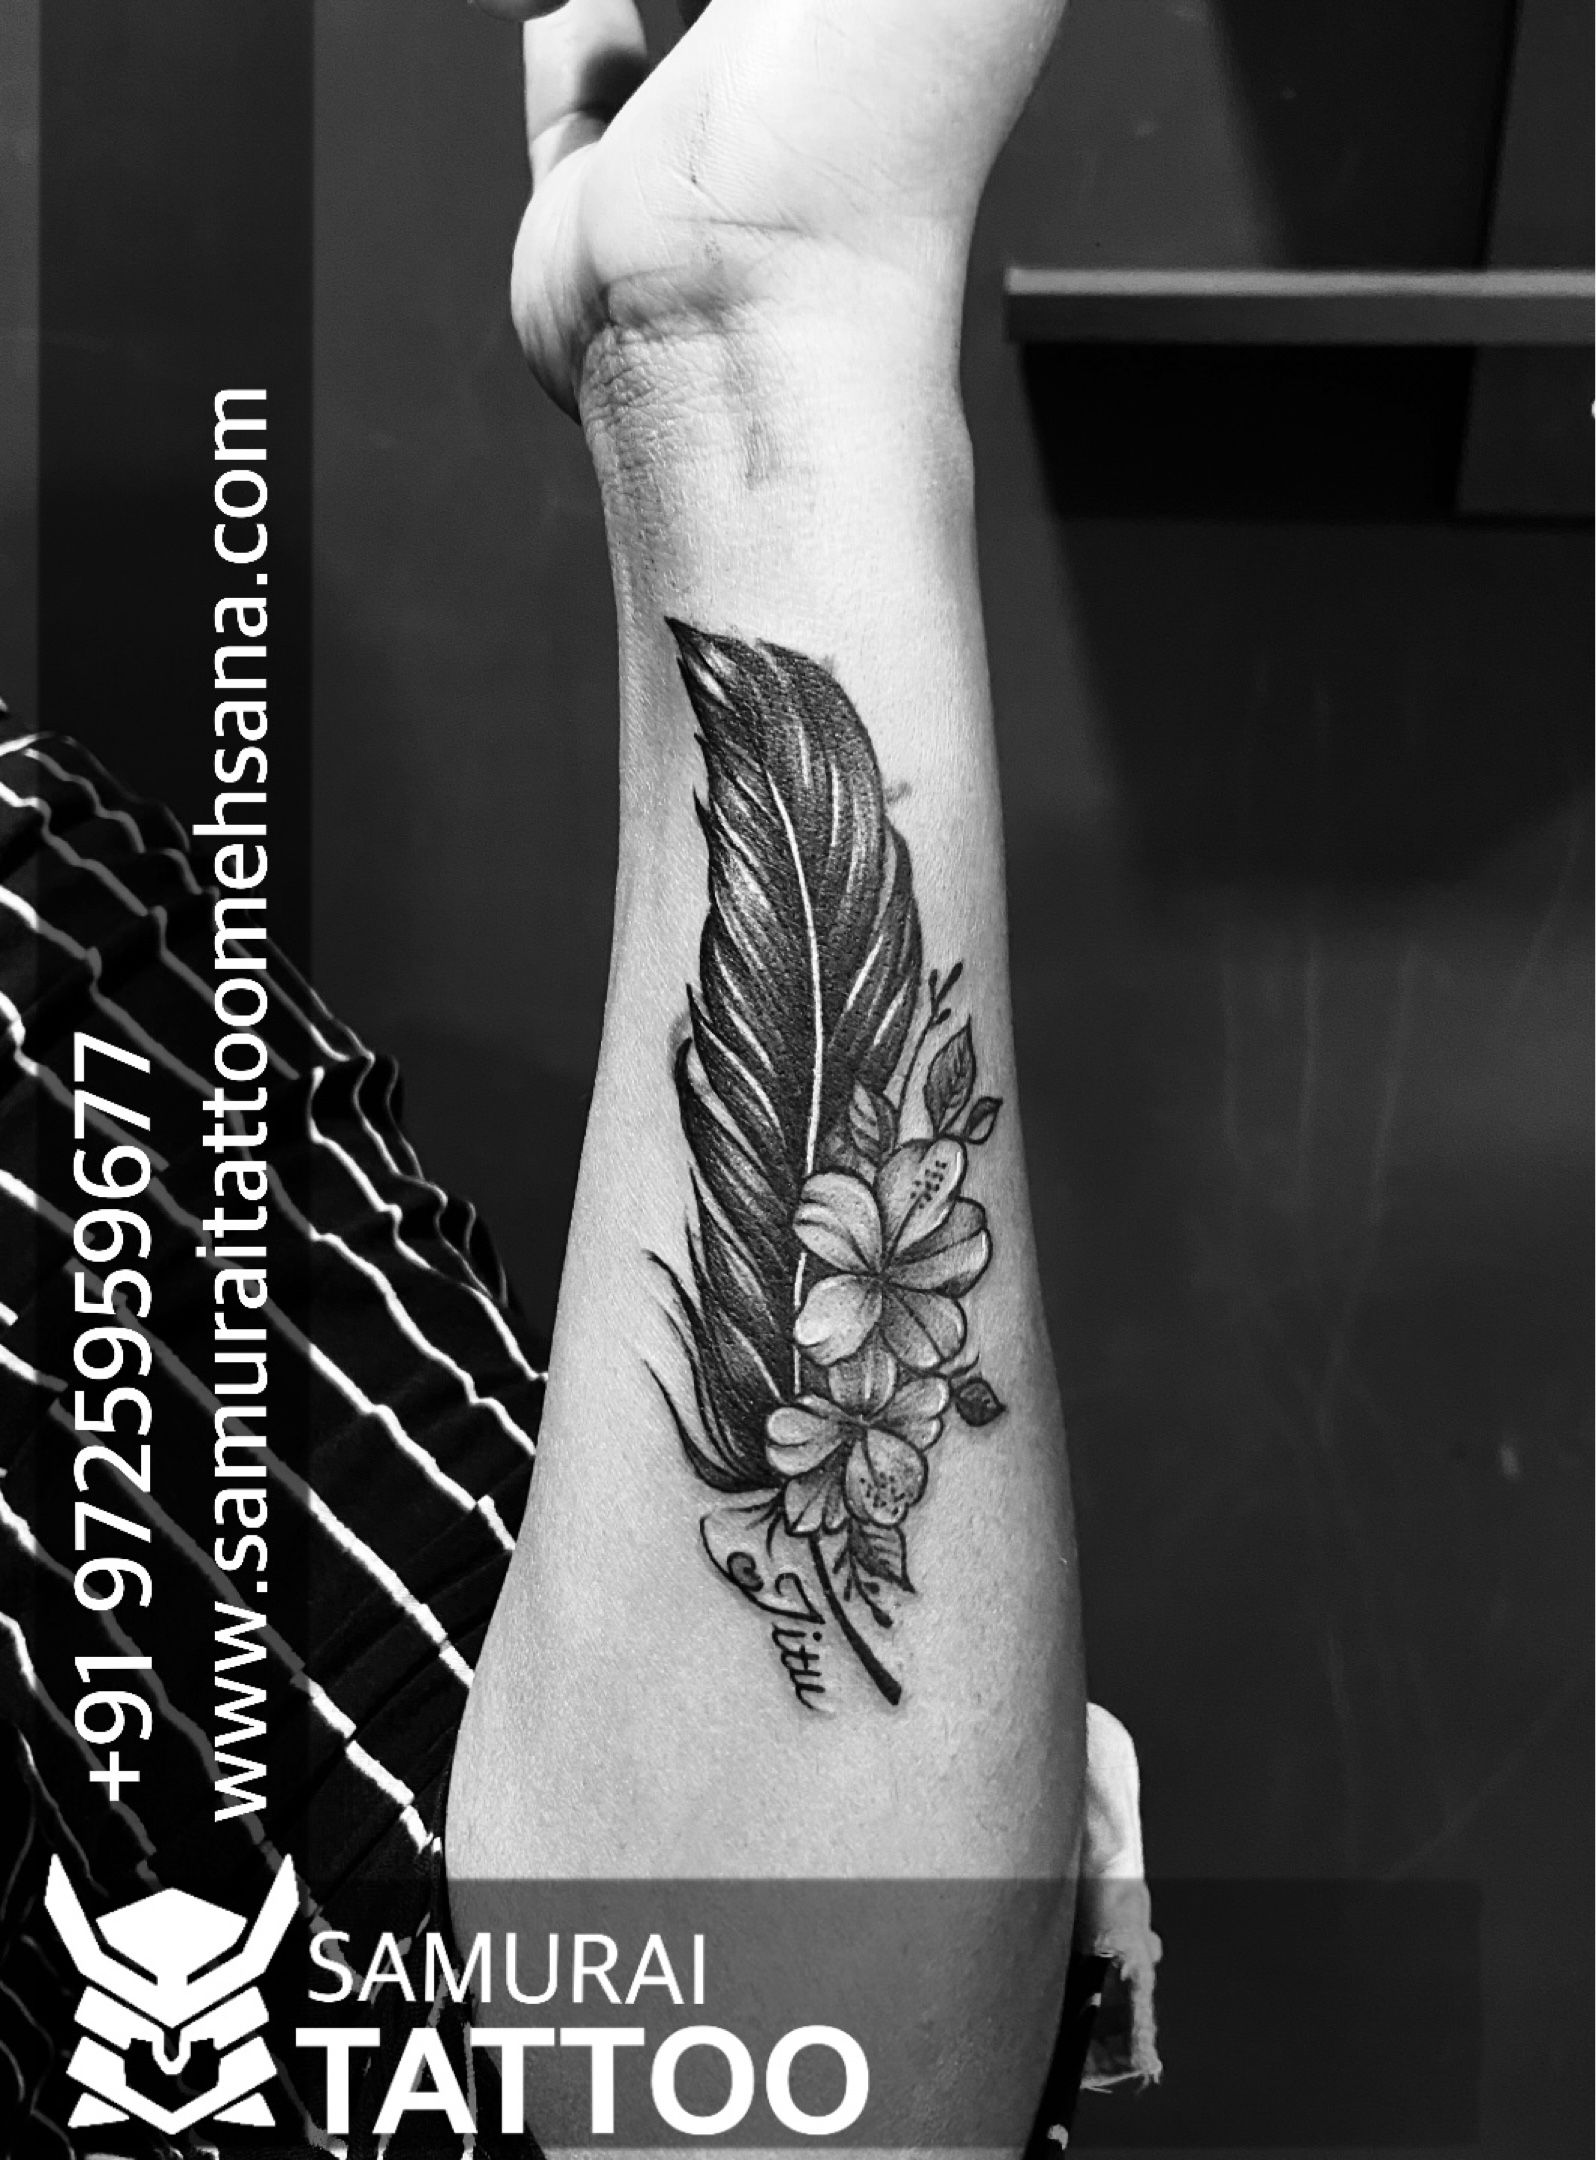 Tattoo uploaded by Samurai Tattoo mehsana • Coverup tattoo design